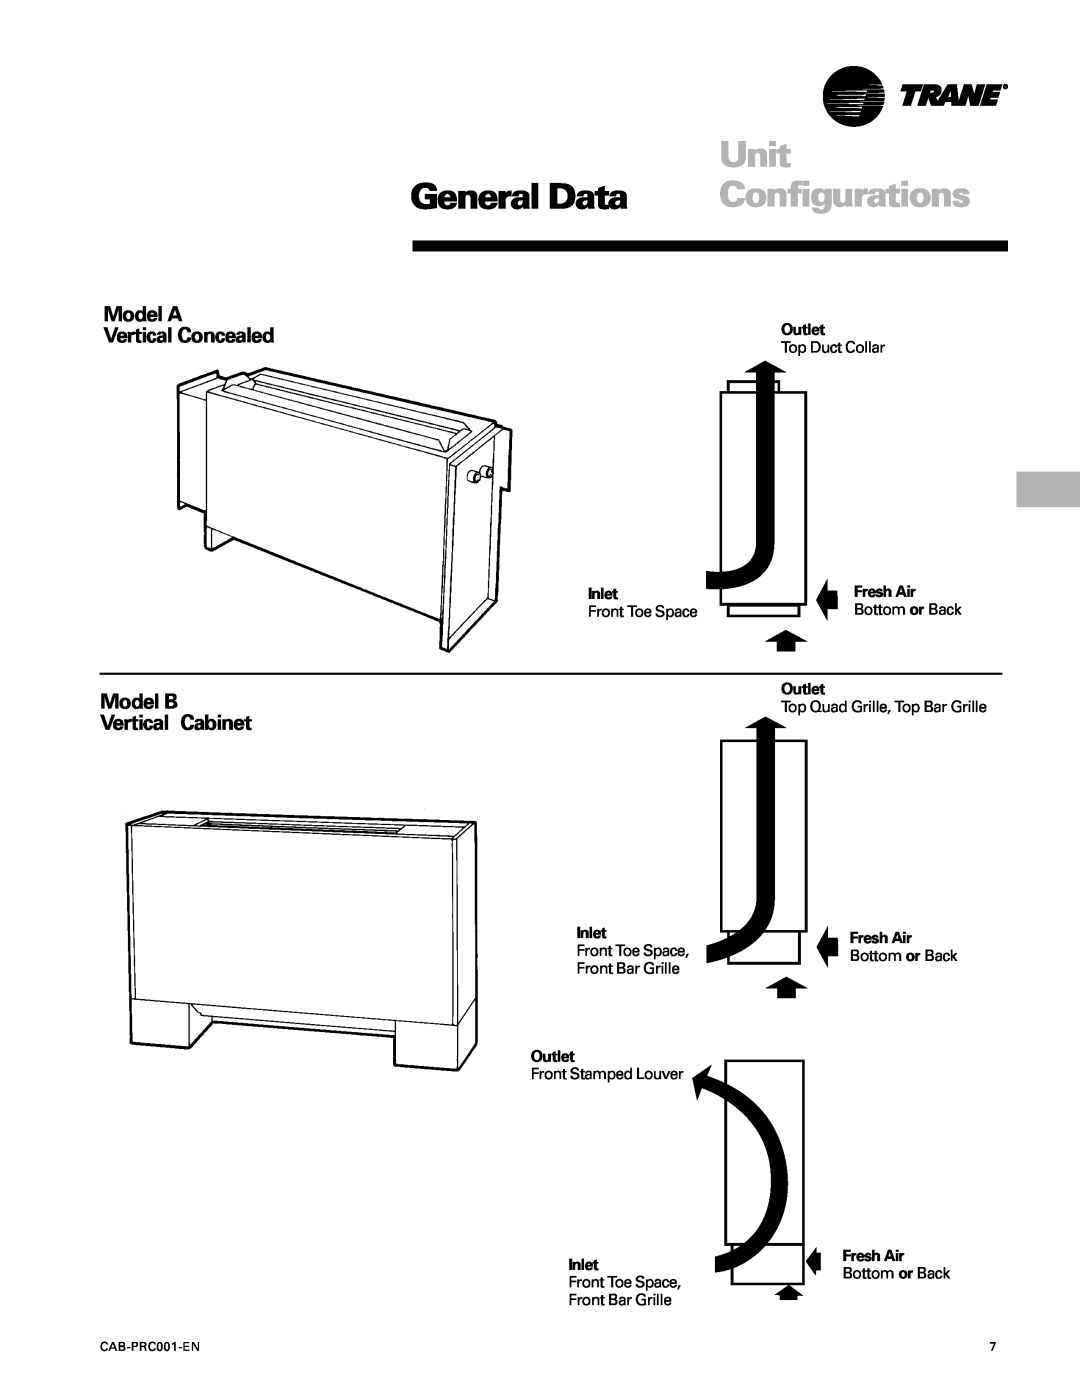 Trane CAB-PRC001-EN manual Unit, General Data, Configurations, Model A Vertical Concealed, Model B Vertical Cabinet 